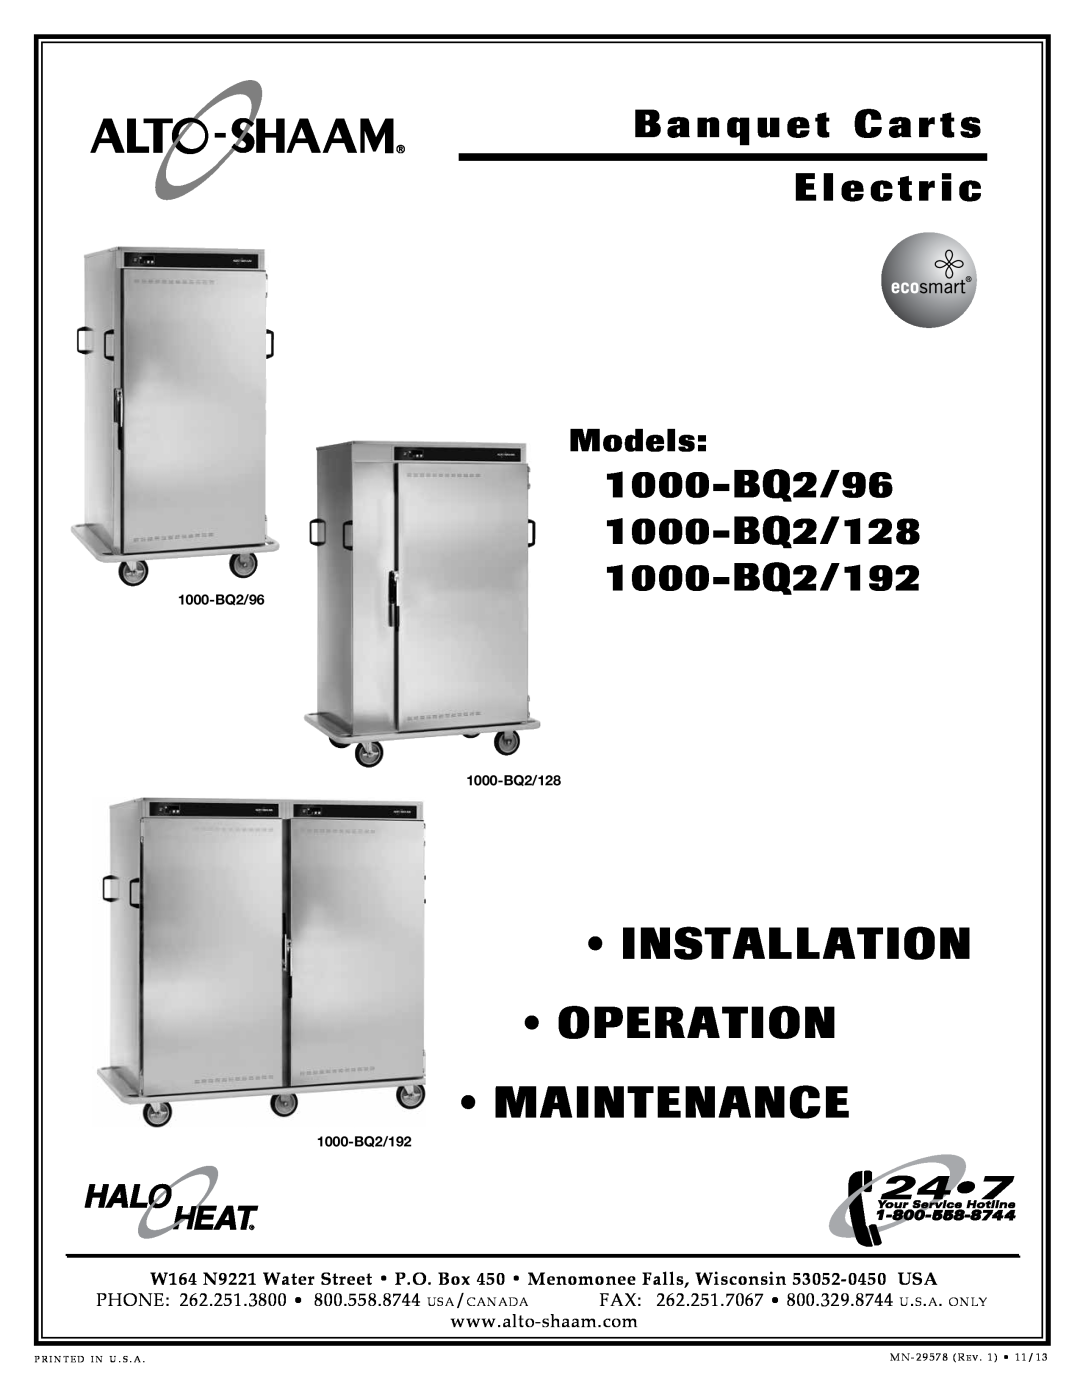 Alto-Shaam 1000-BQ2/192 manual Installation, Operation, Maintenance, PHONE 262.251.3800 800.558.8744 USA/CANADA, Models 